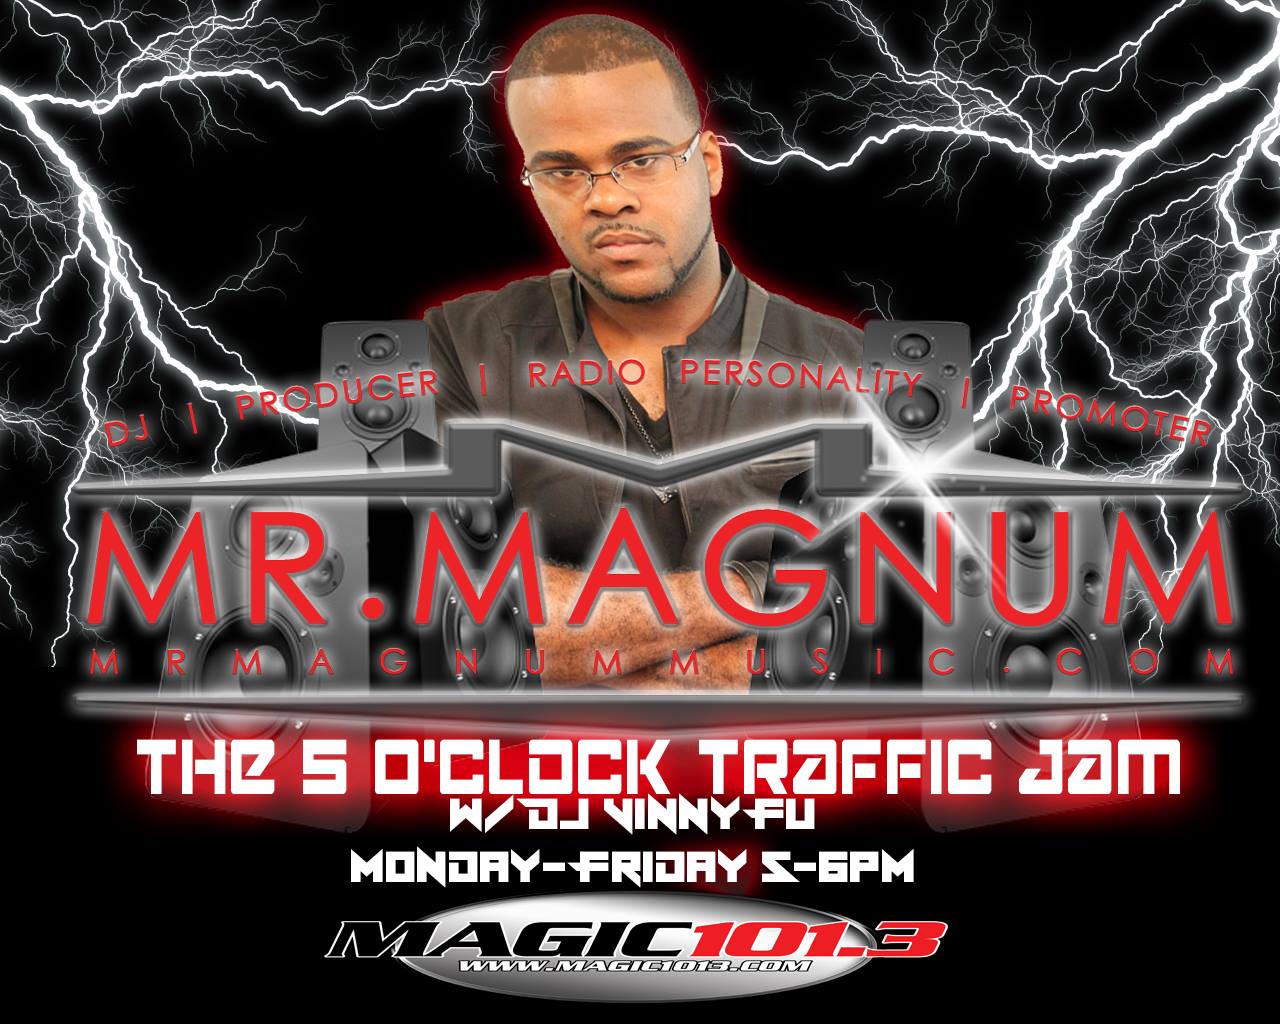 The 5 O’Clock Traffic Jam 2-6-2017 on Magic 101.3